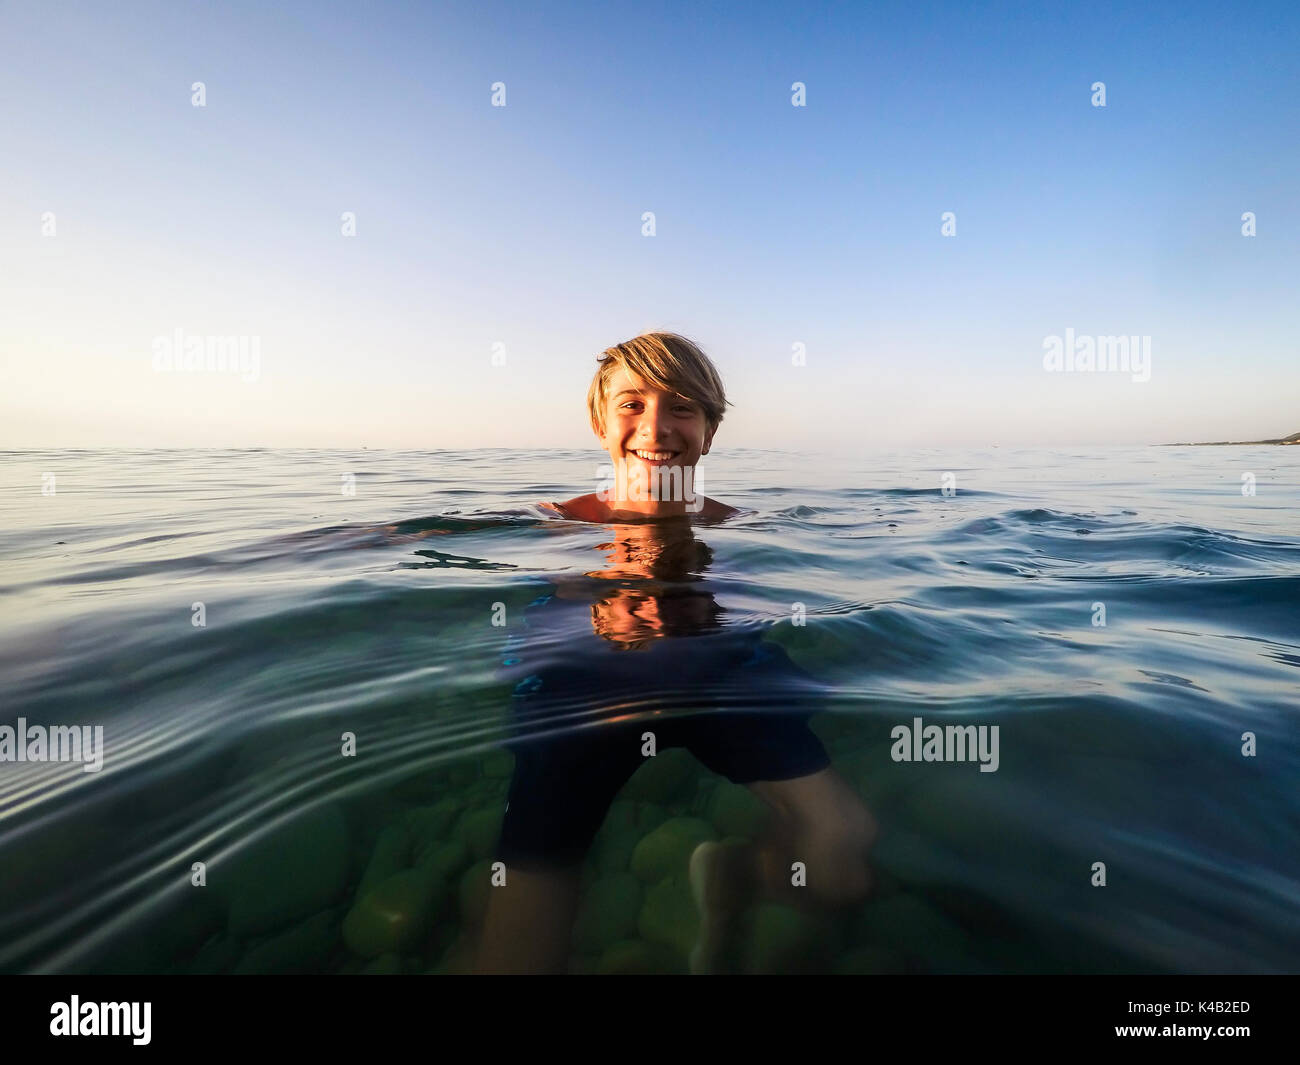 Teenager im Meer schwimmen - Sommer - Sizilien Mittelmeer Stockfoto